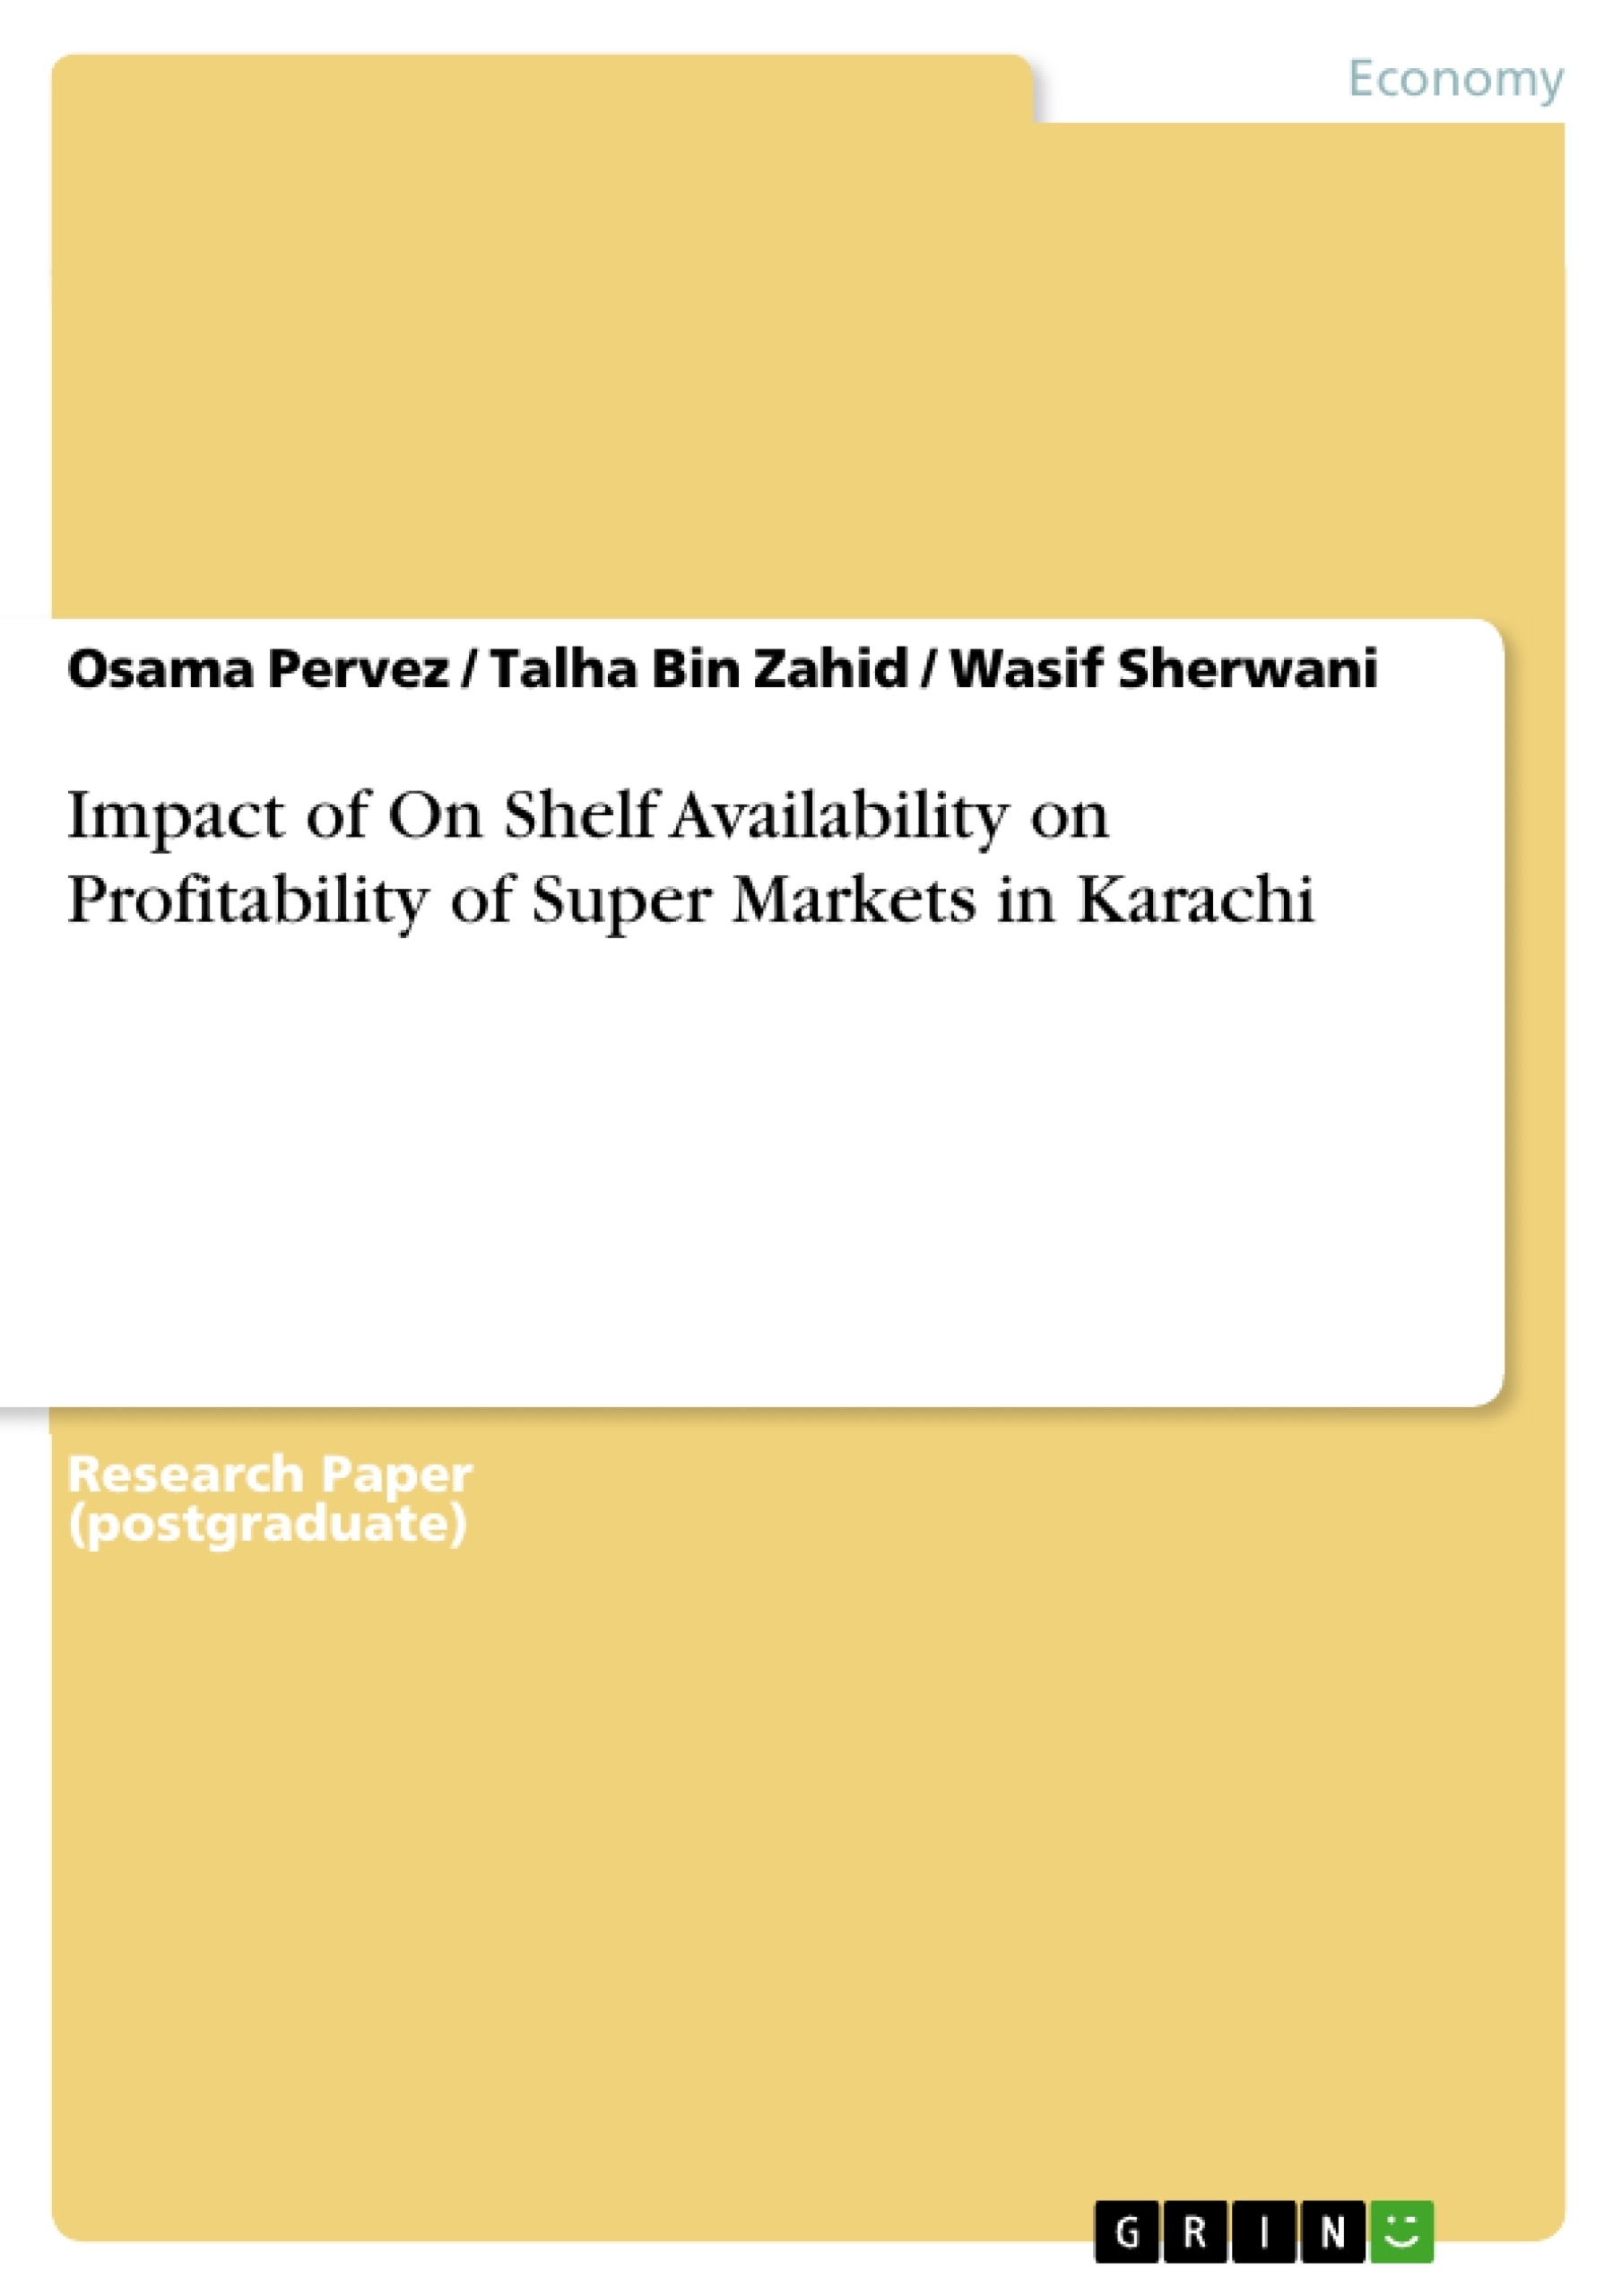 Title: Impact of On Shelf Availability on Profitability of Super Markets in Karachi